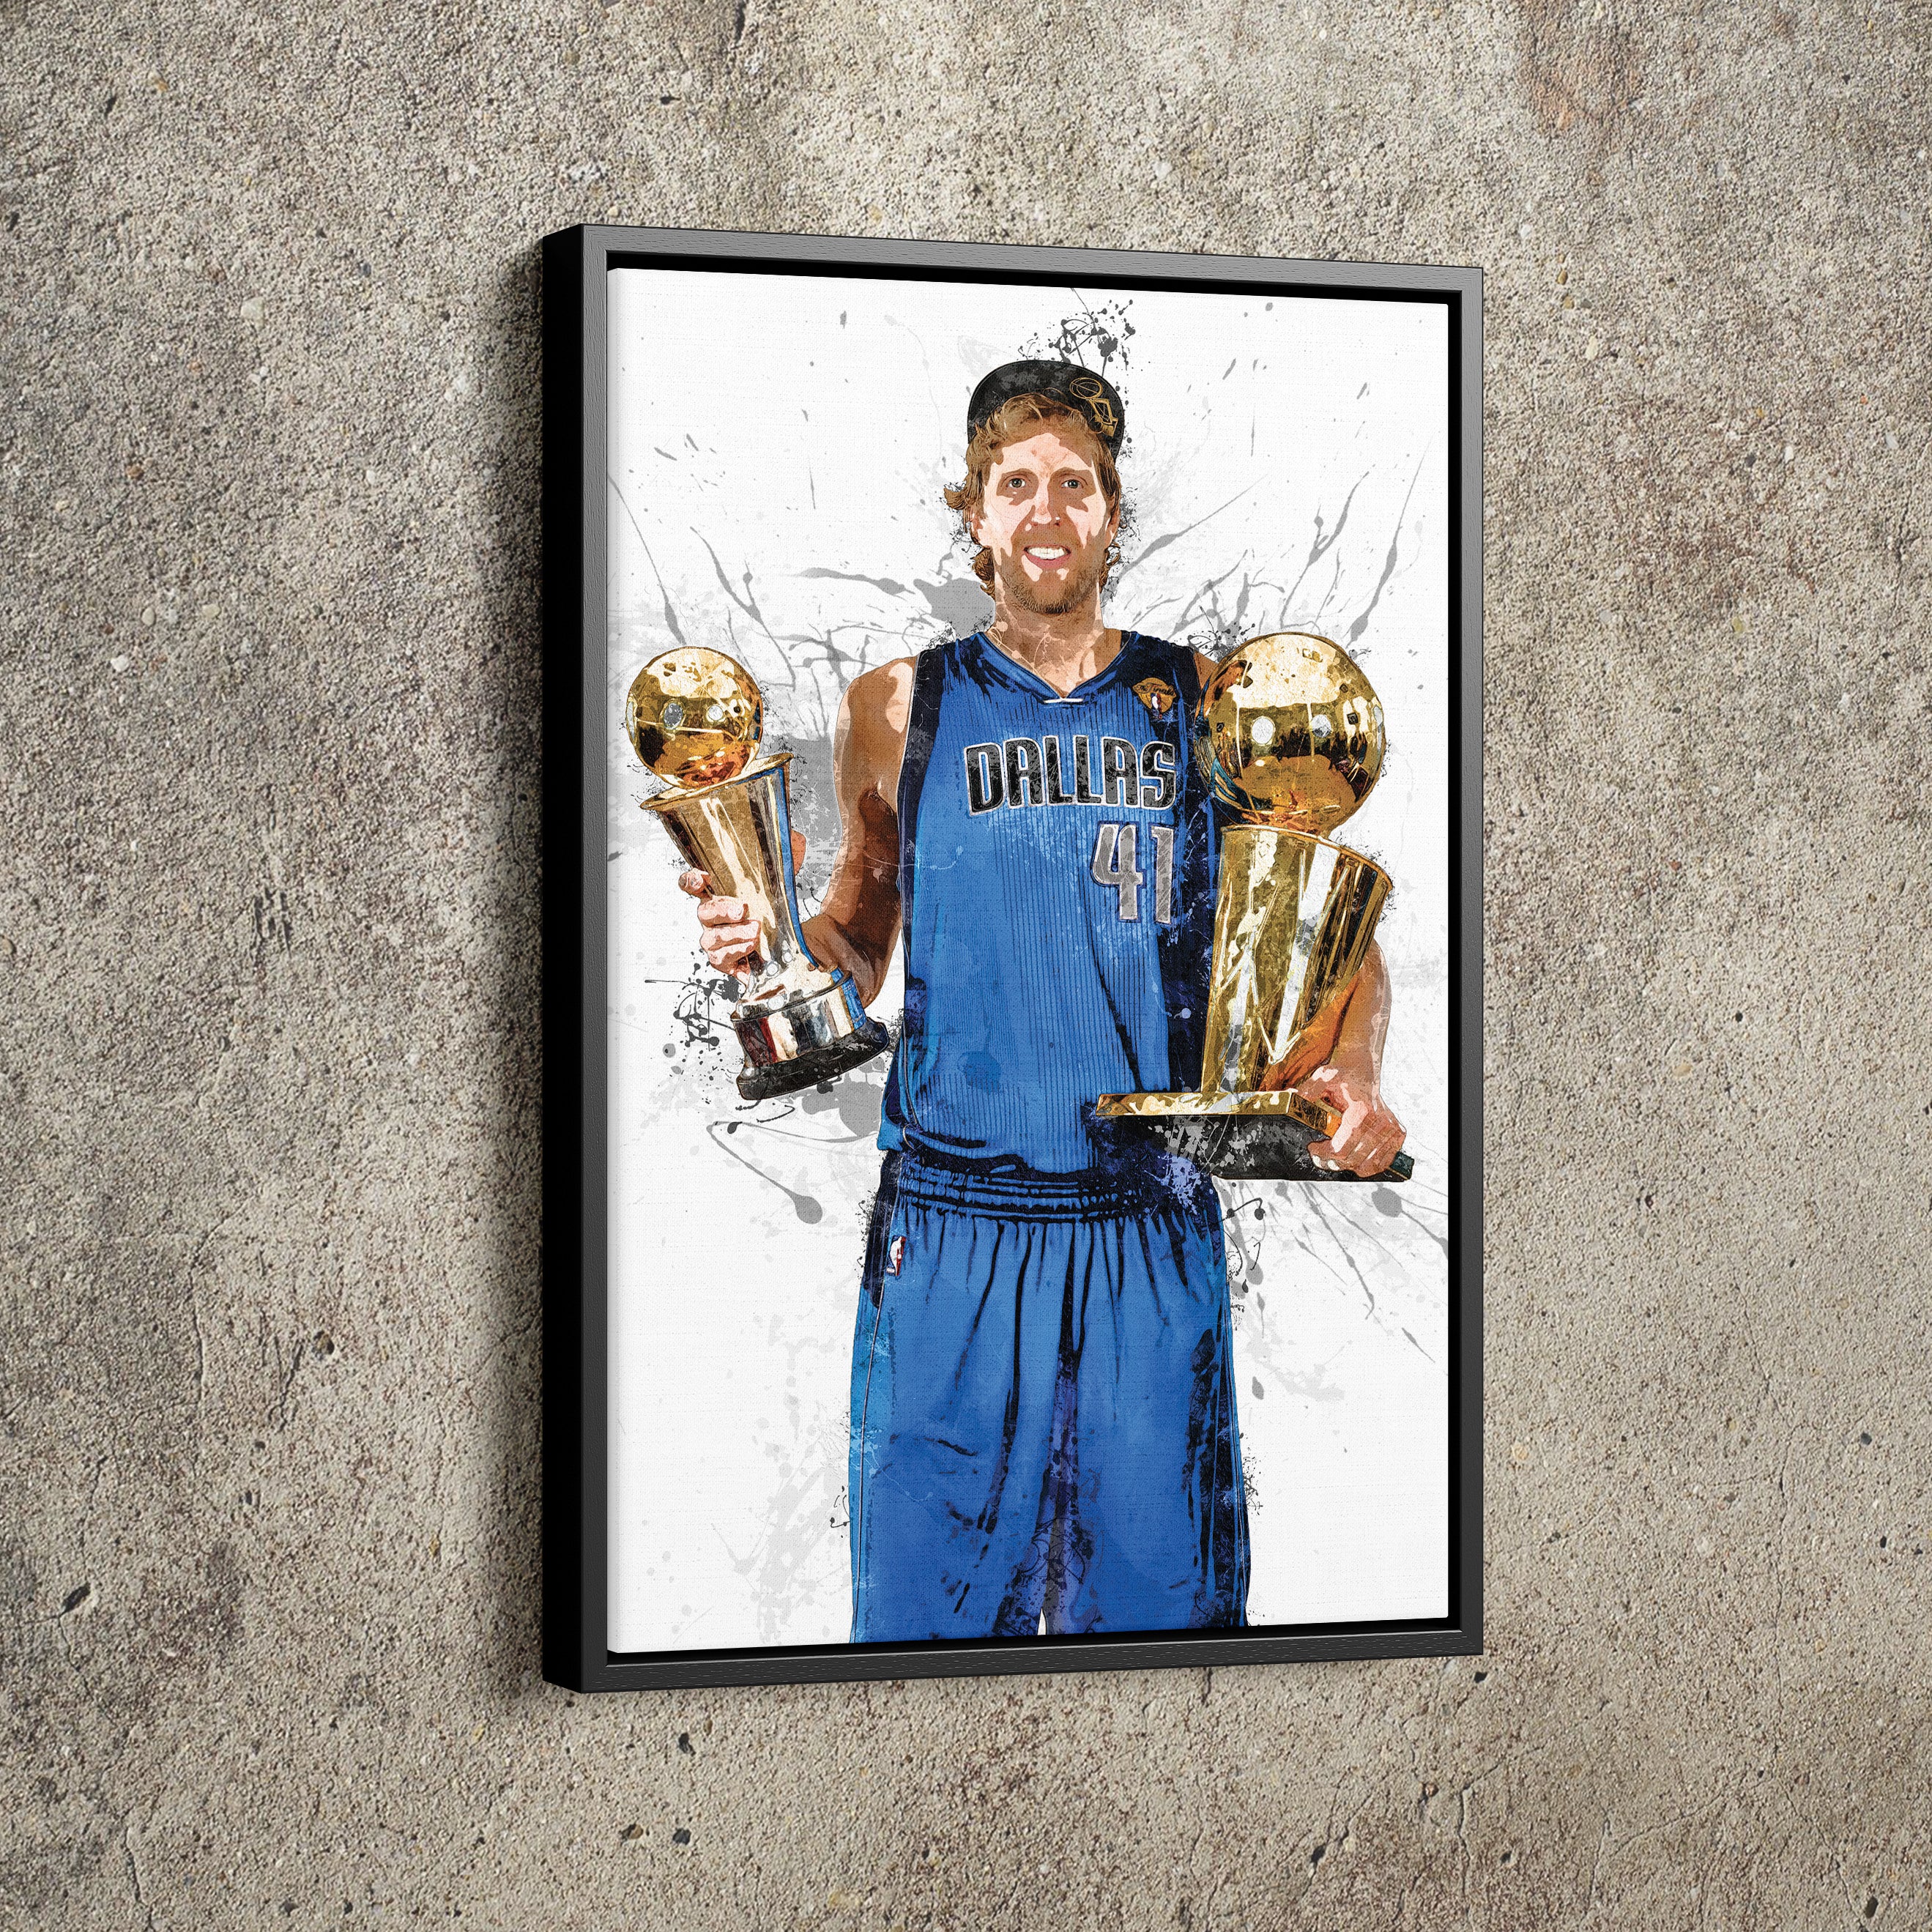  TUITA Dirk Nowitzki Germany Basketball Player Poster